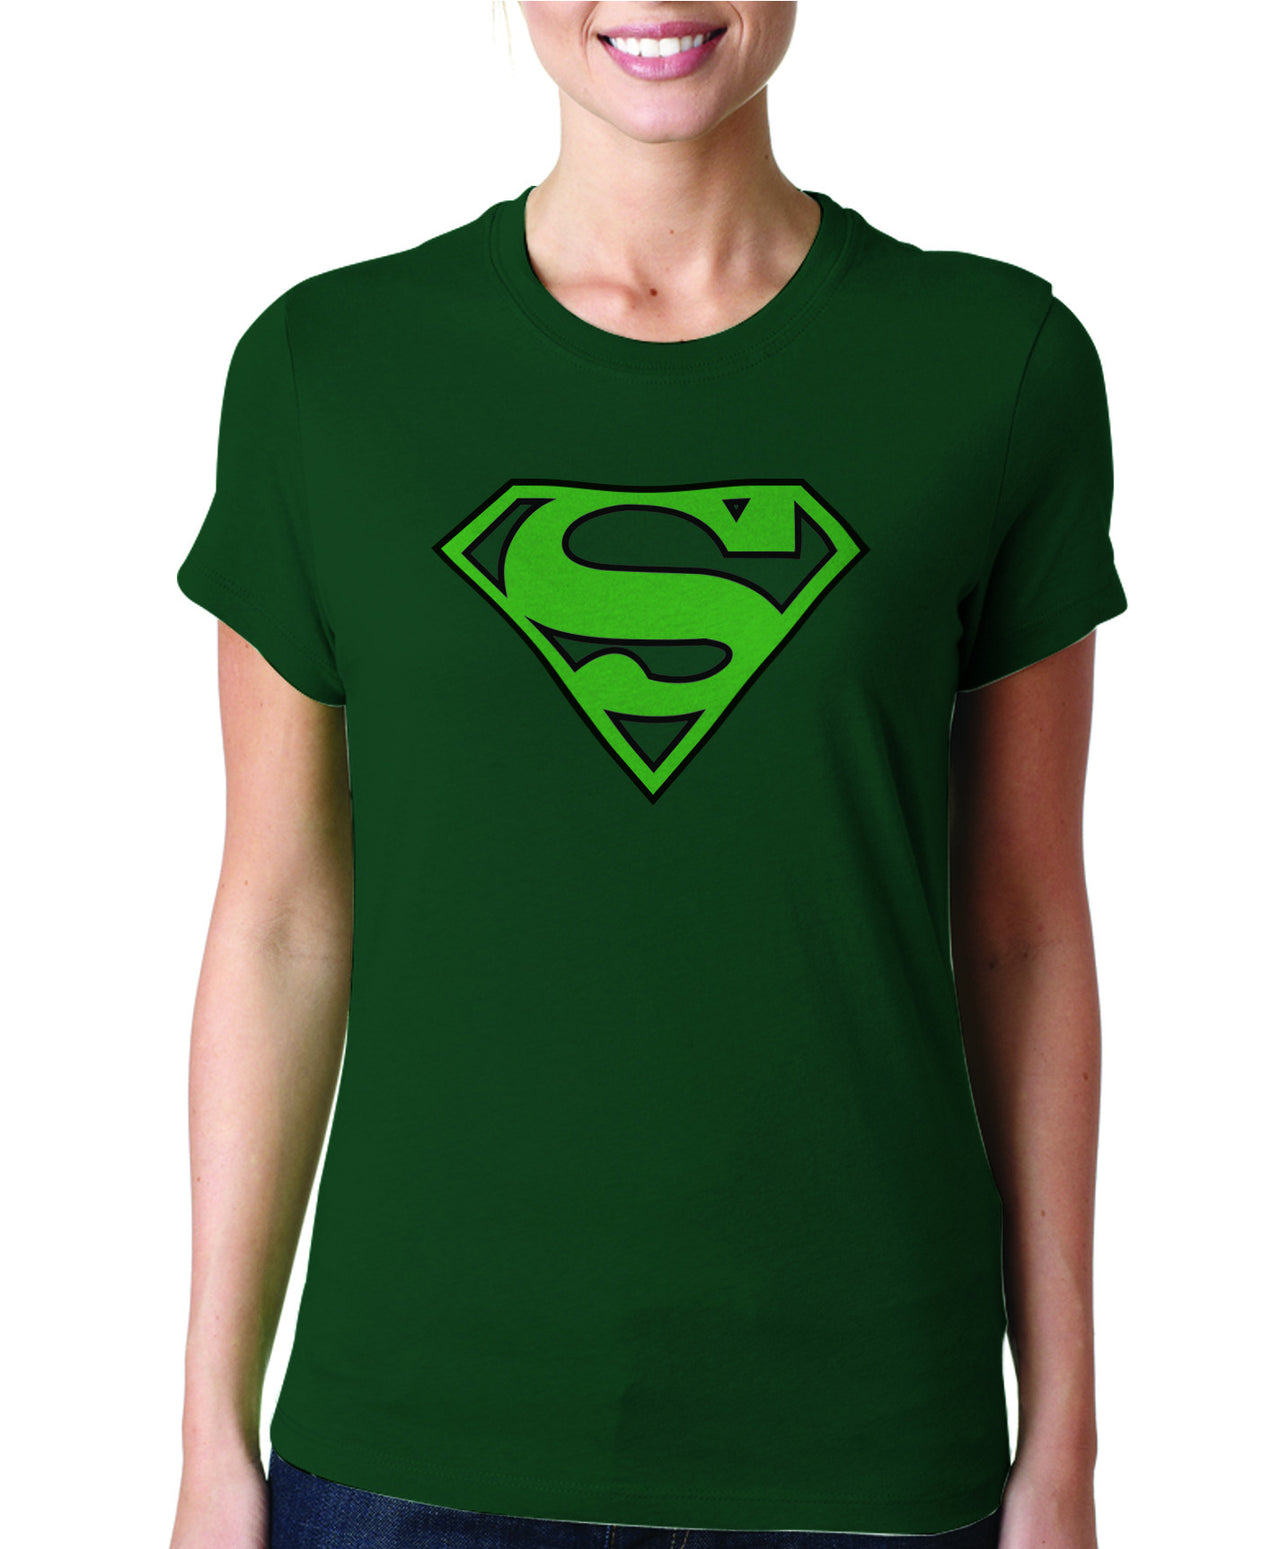 Superman Green Logo on Dark Green Colored Fitted tshirt for Women - TshirtNow.net - 1